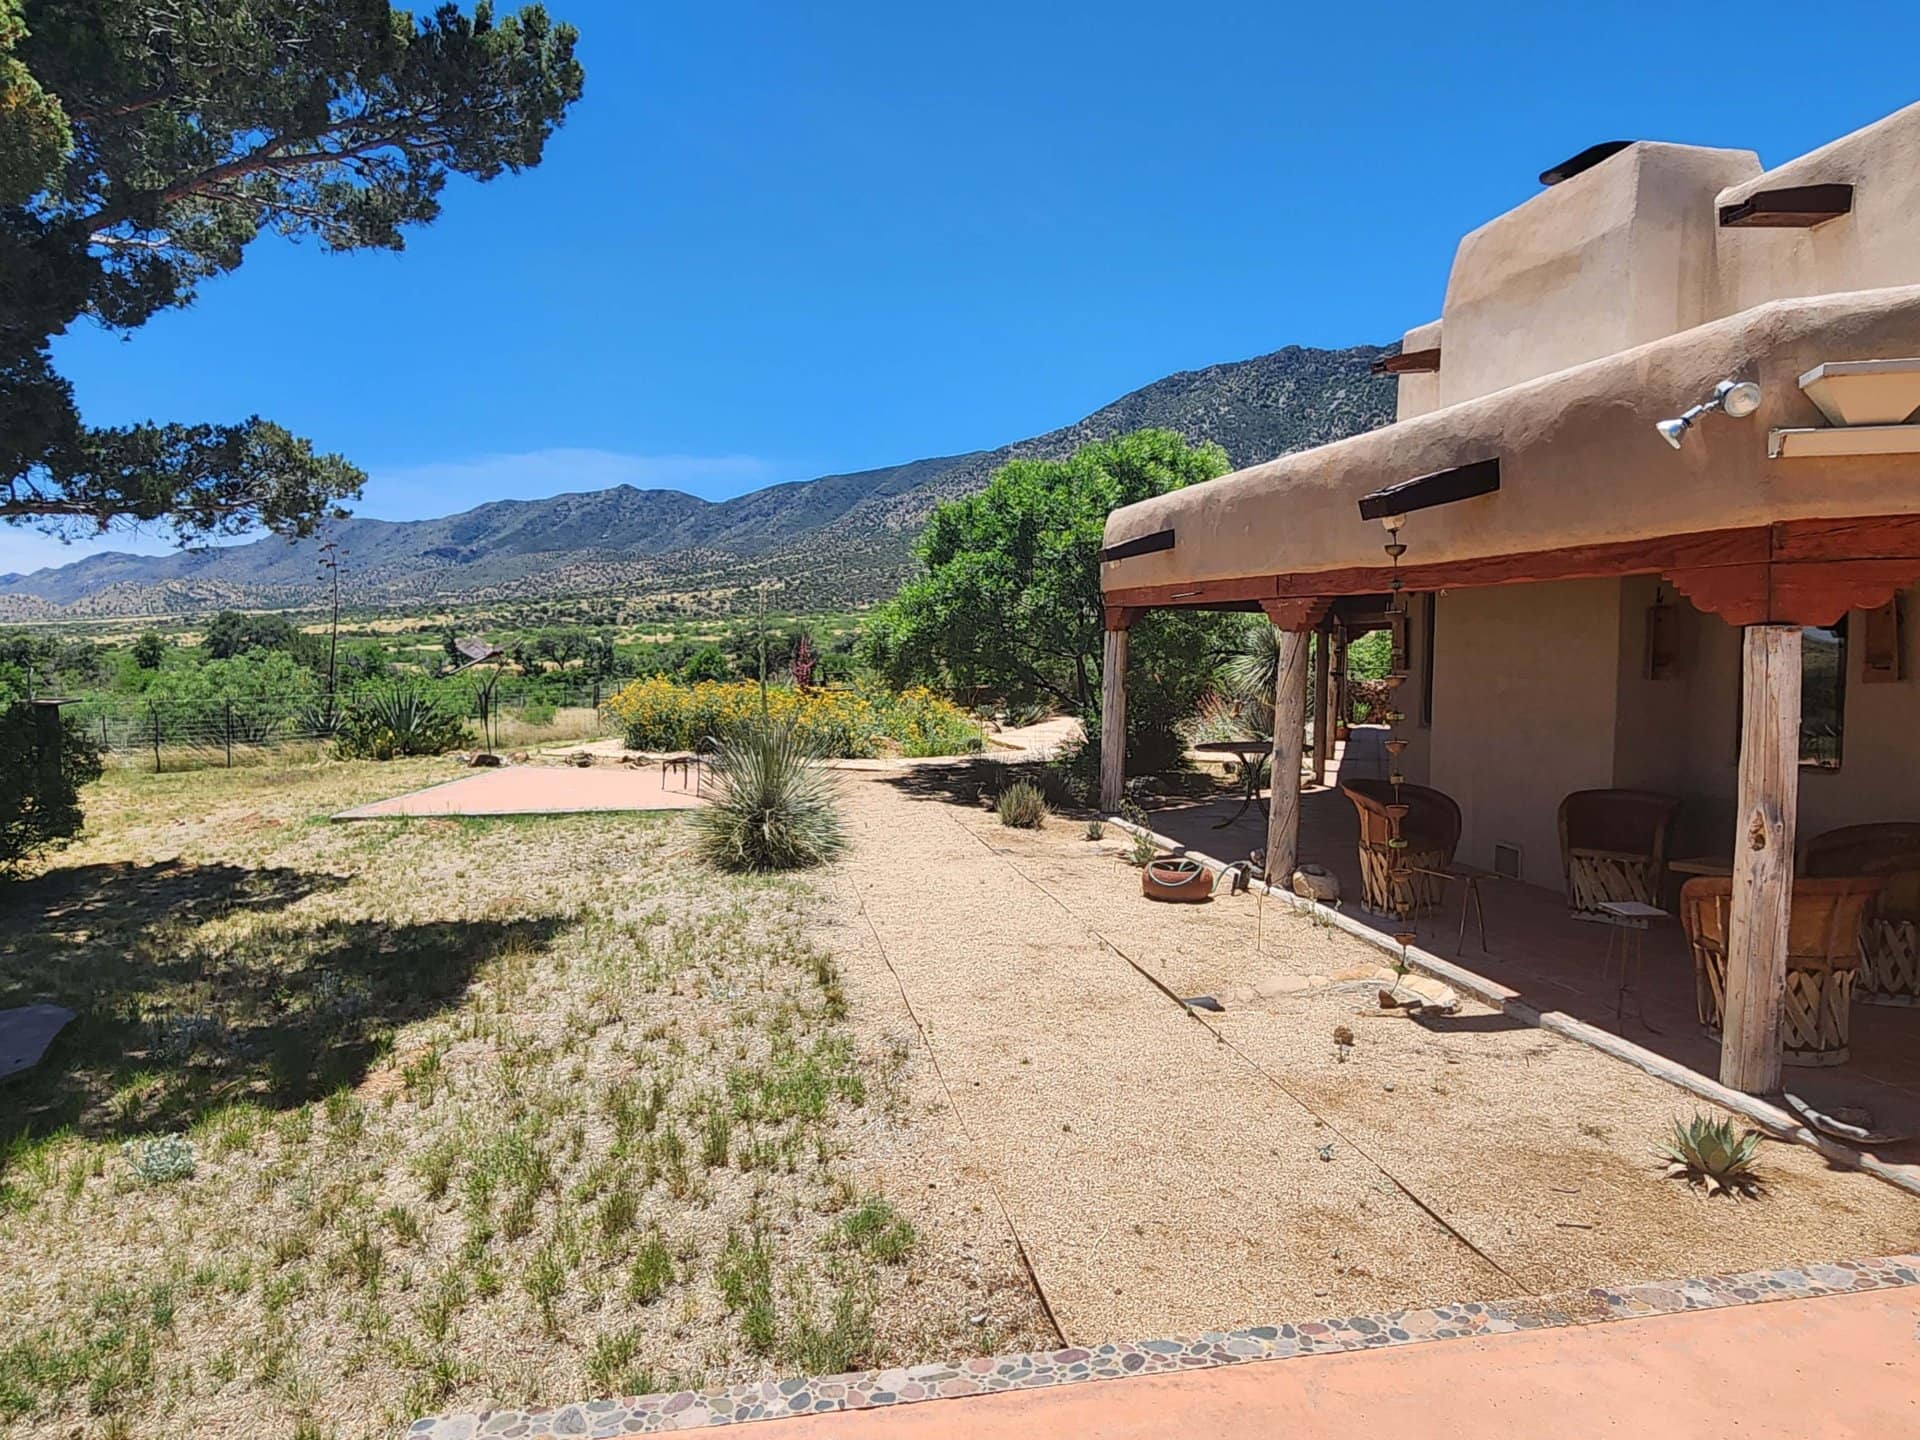 home back yard with veiw arizona hacienda de la dragoon mountains